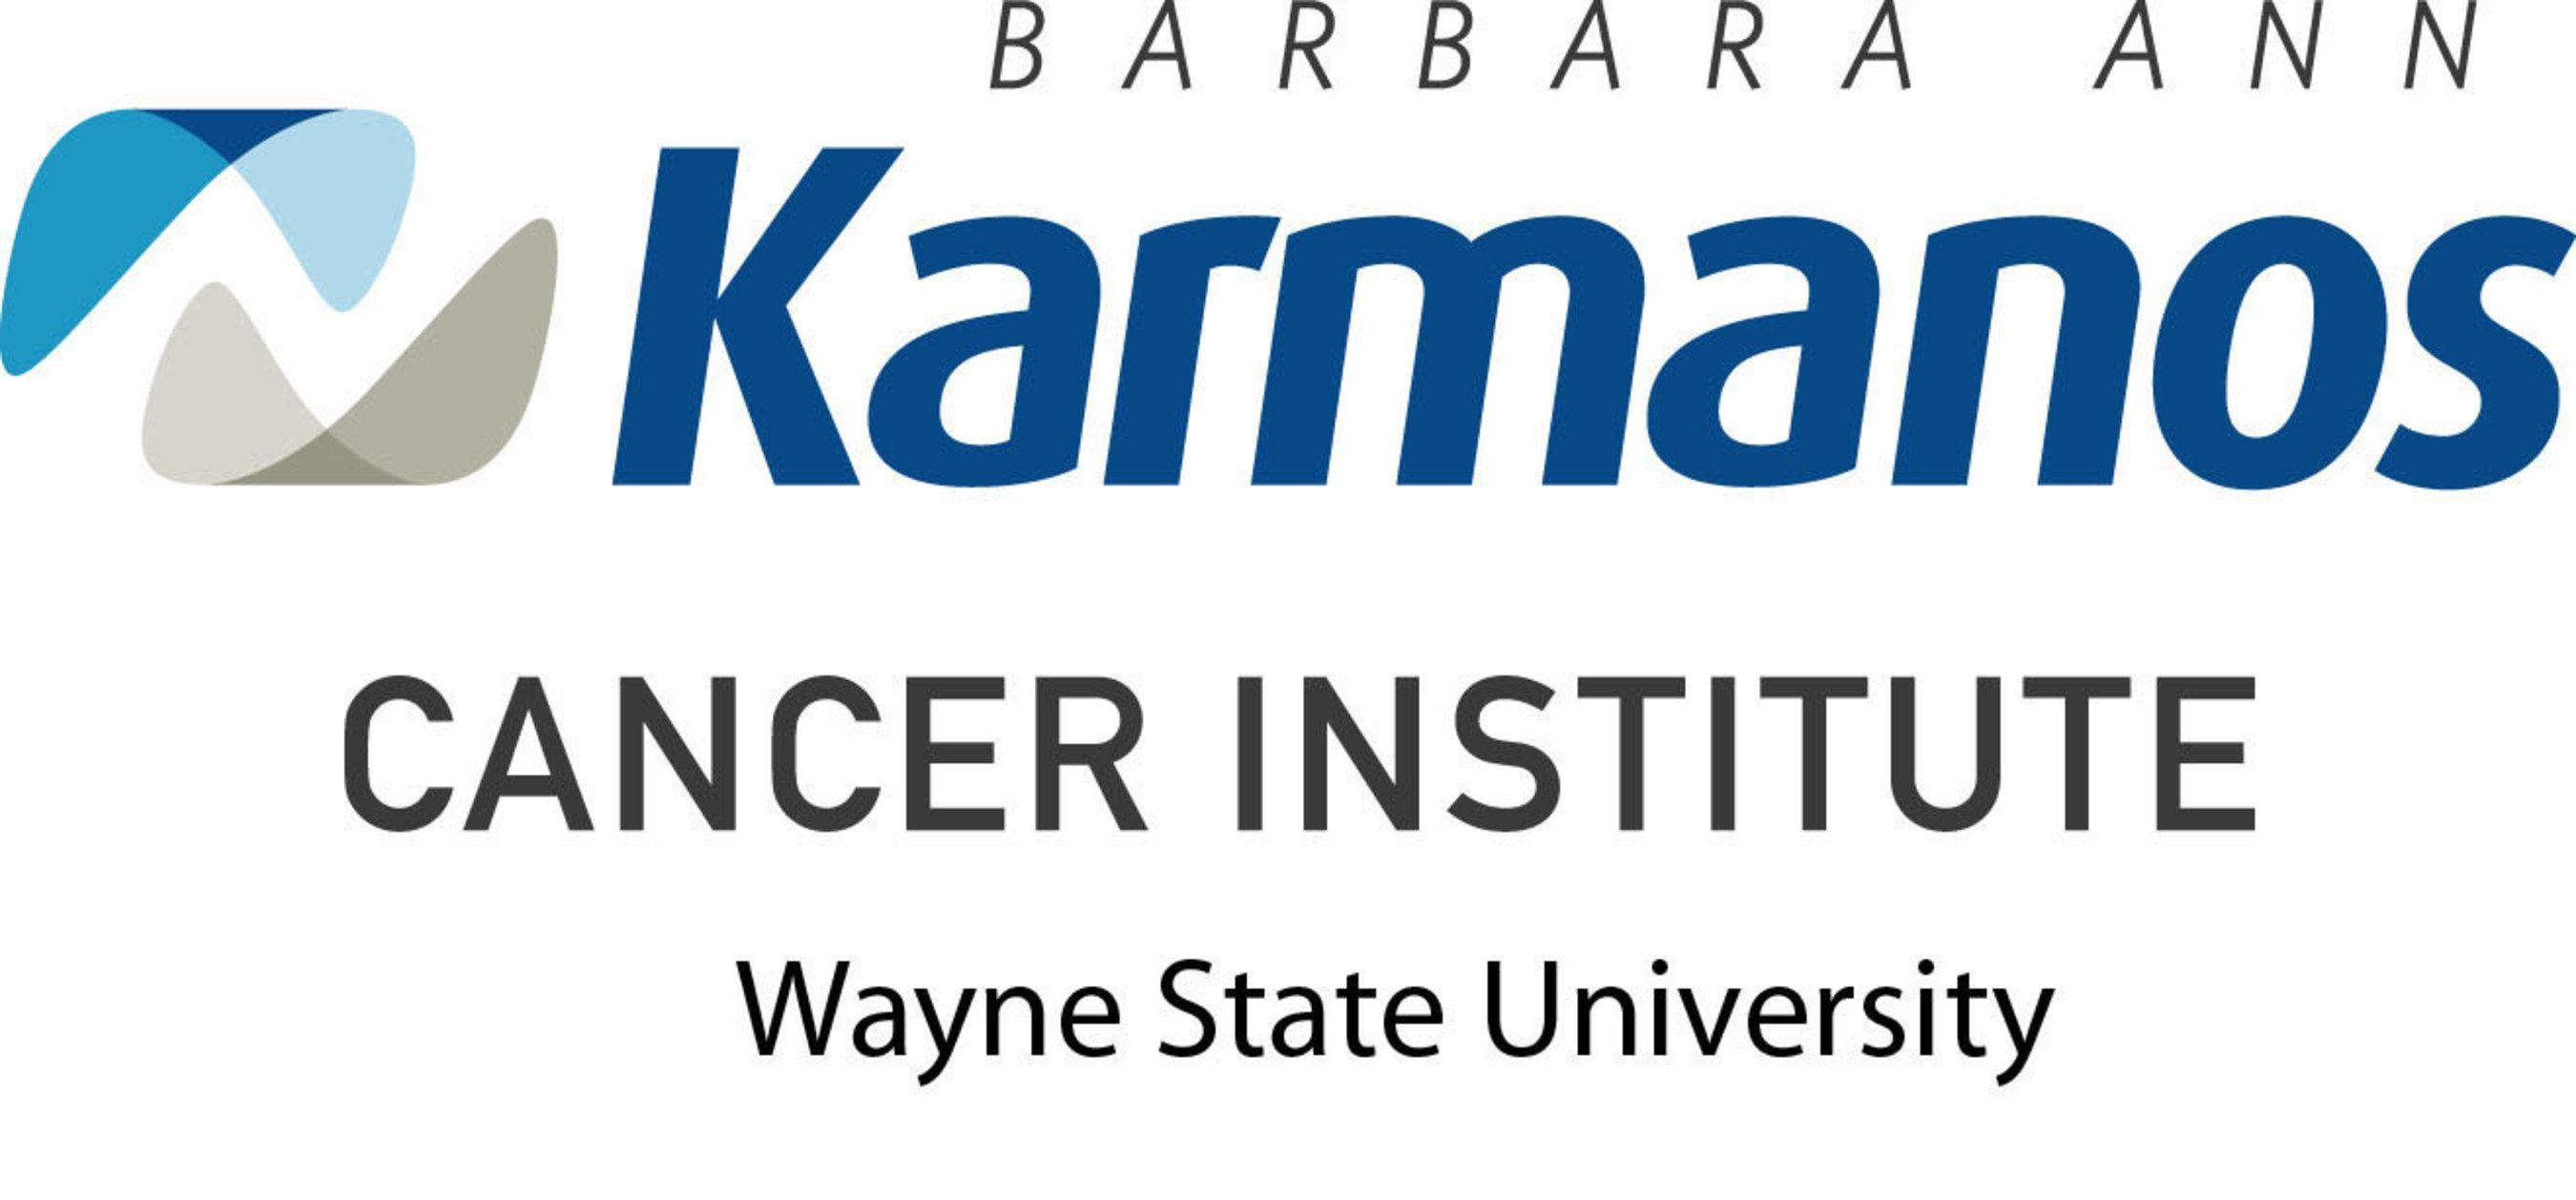 Karmanos Logo - Karmanos Cancer Institute named Screening Center of Excellence